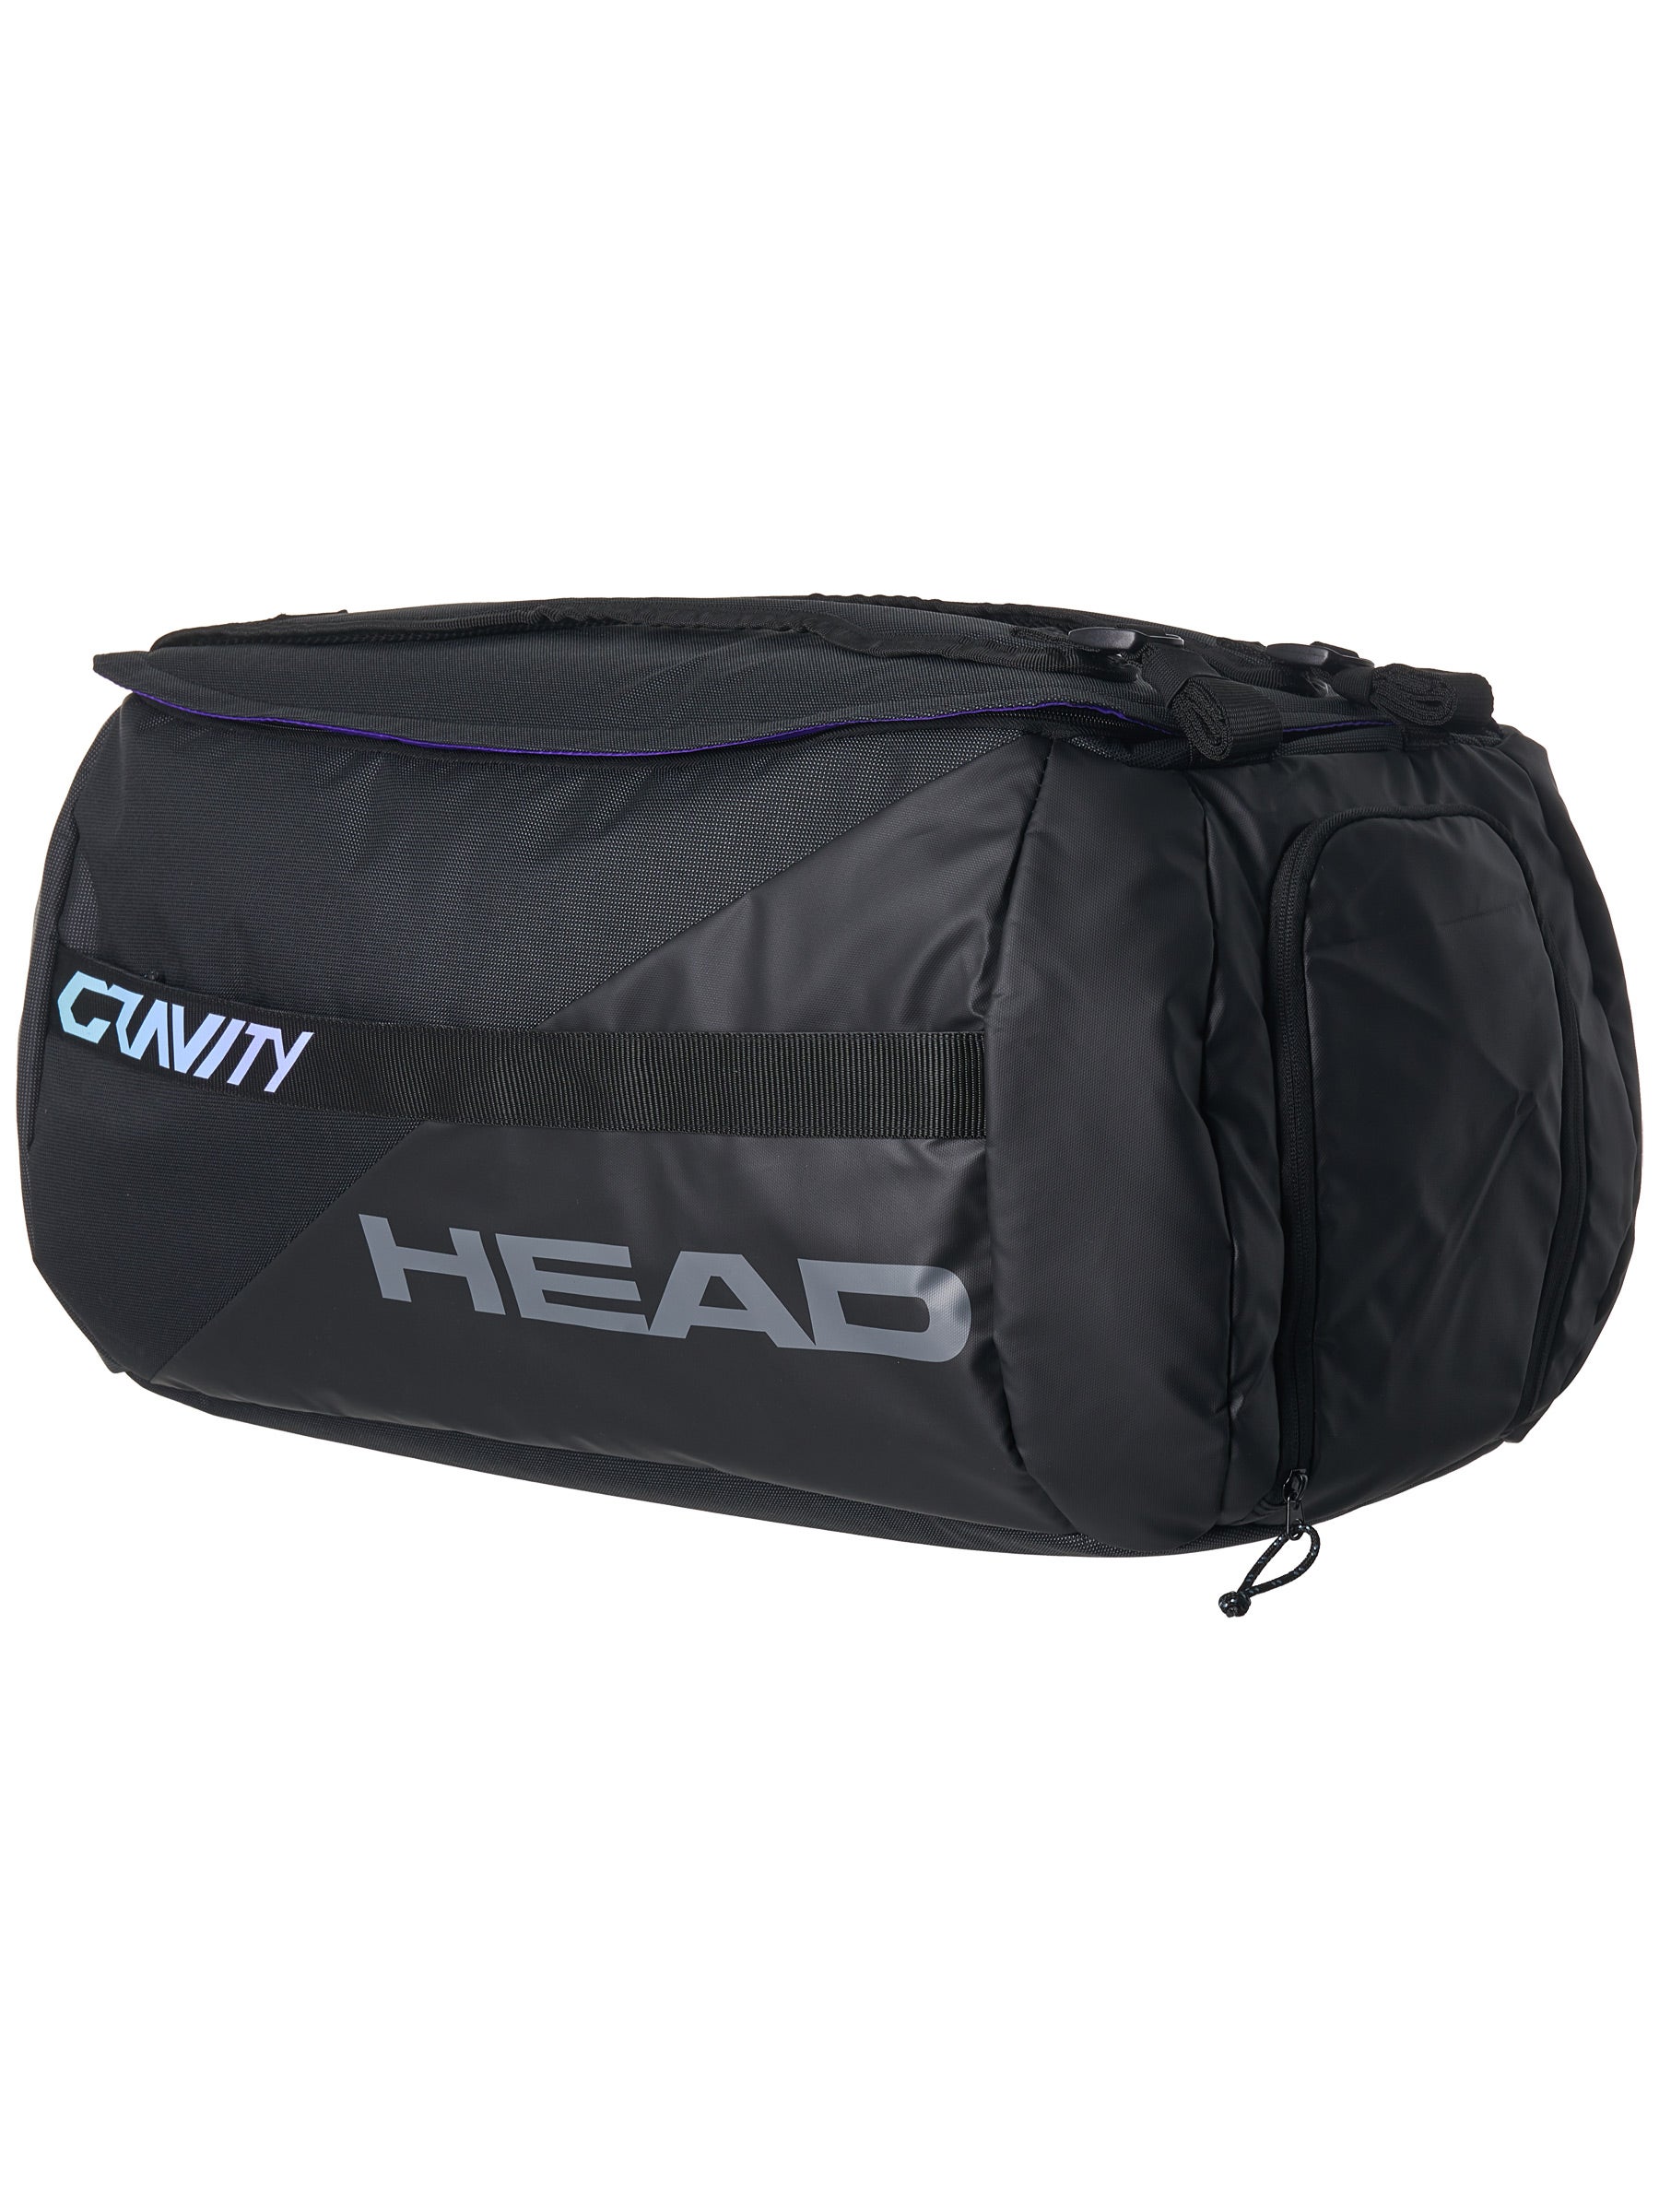 Details about   Head Gravity Duffle Tennis Bag 12pk